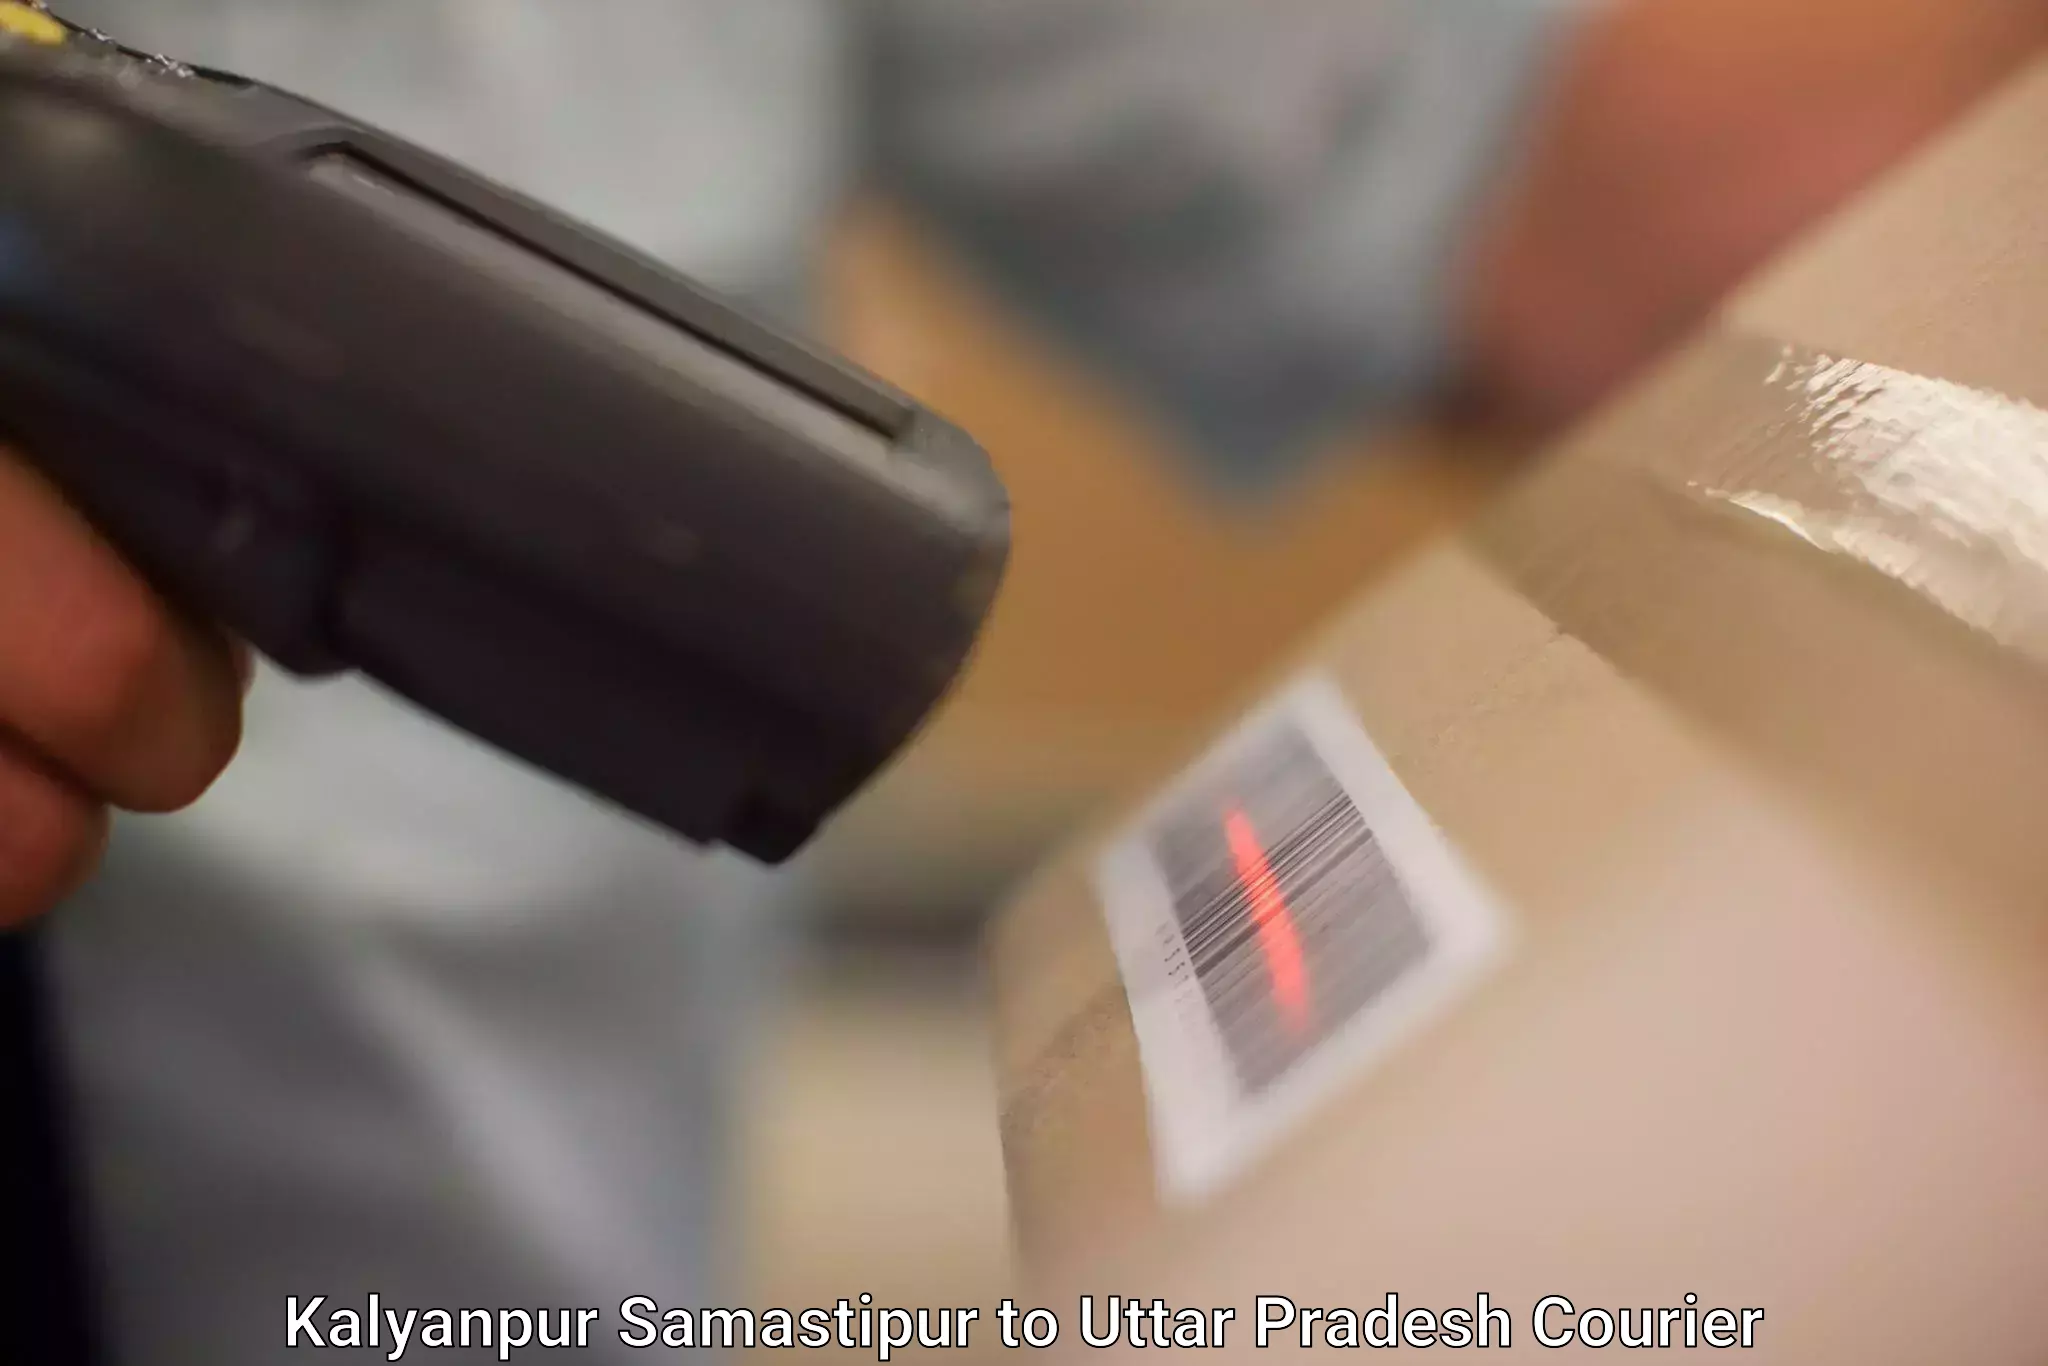 Professional courier handling Kalyanpur Samastipur to Uttar Pradesh